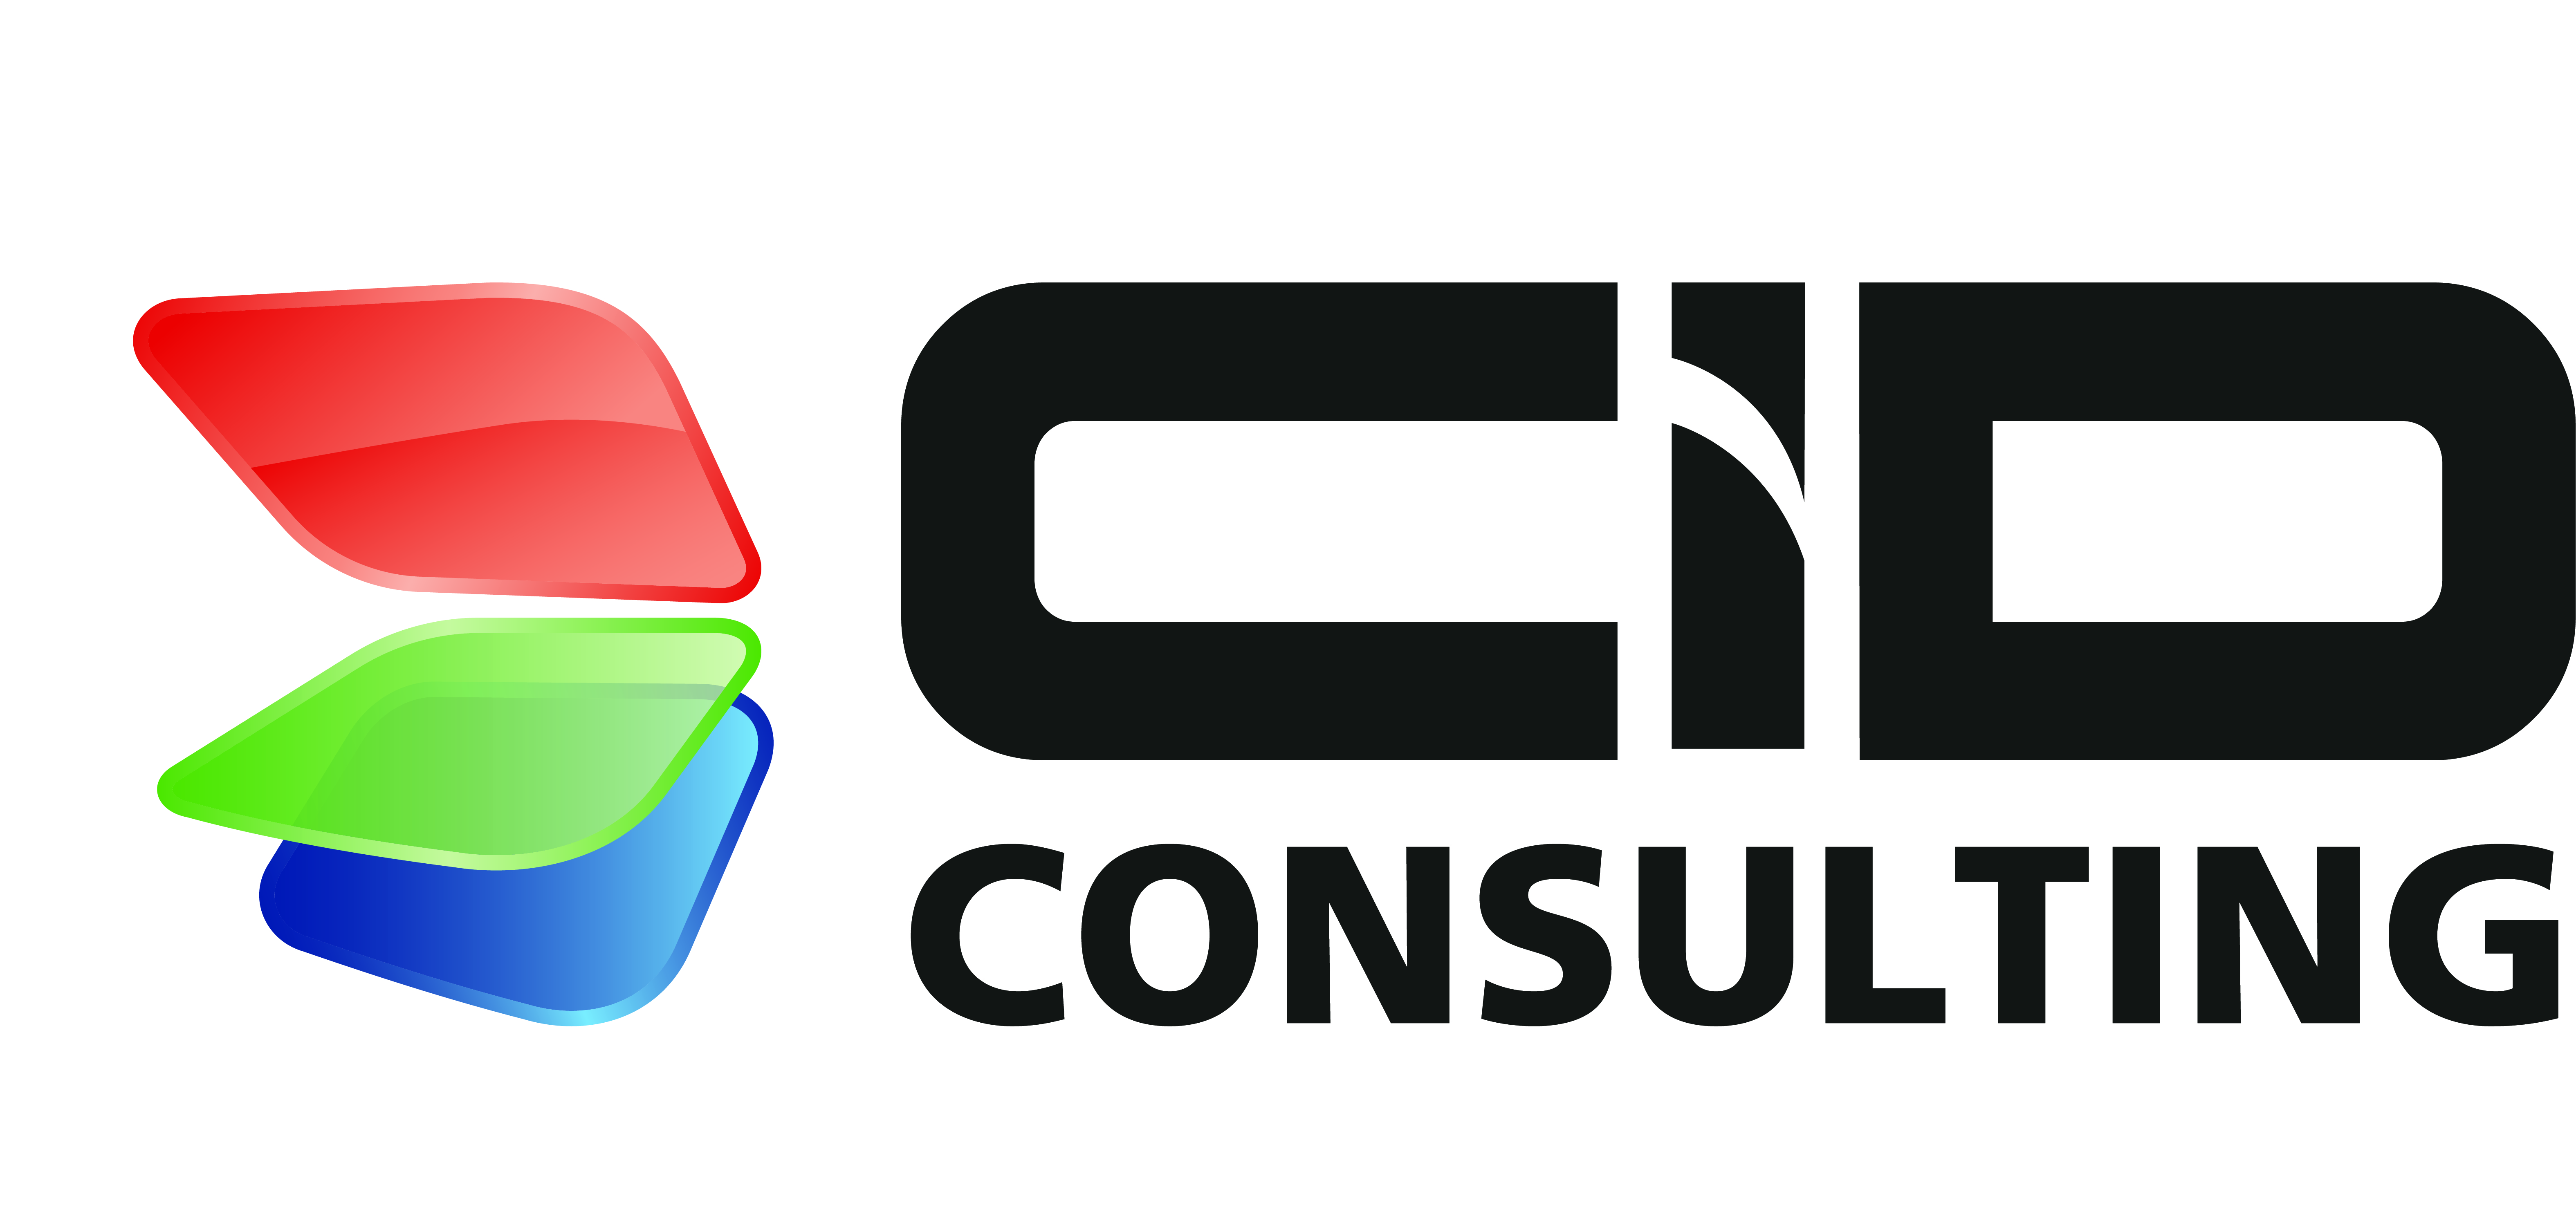 CID Logo